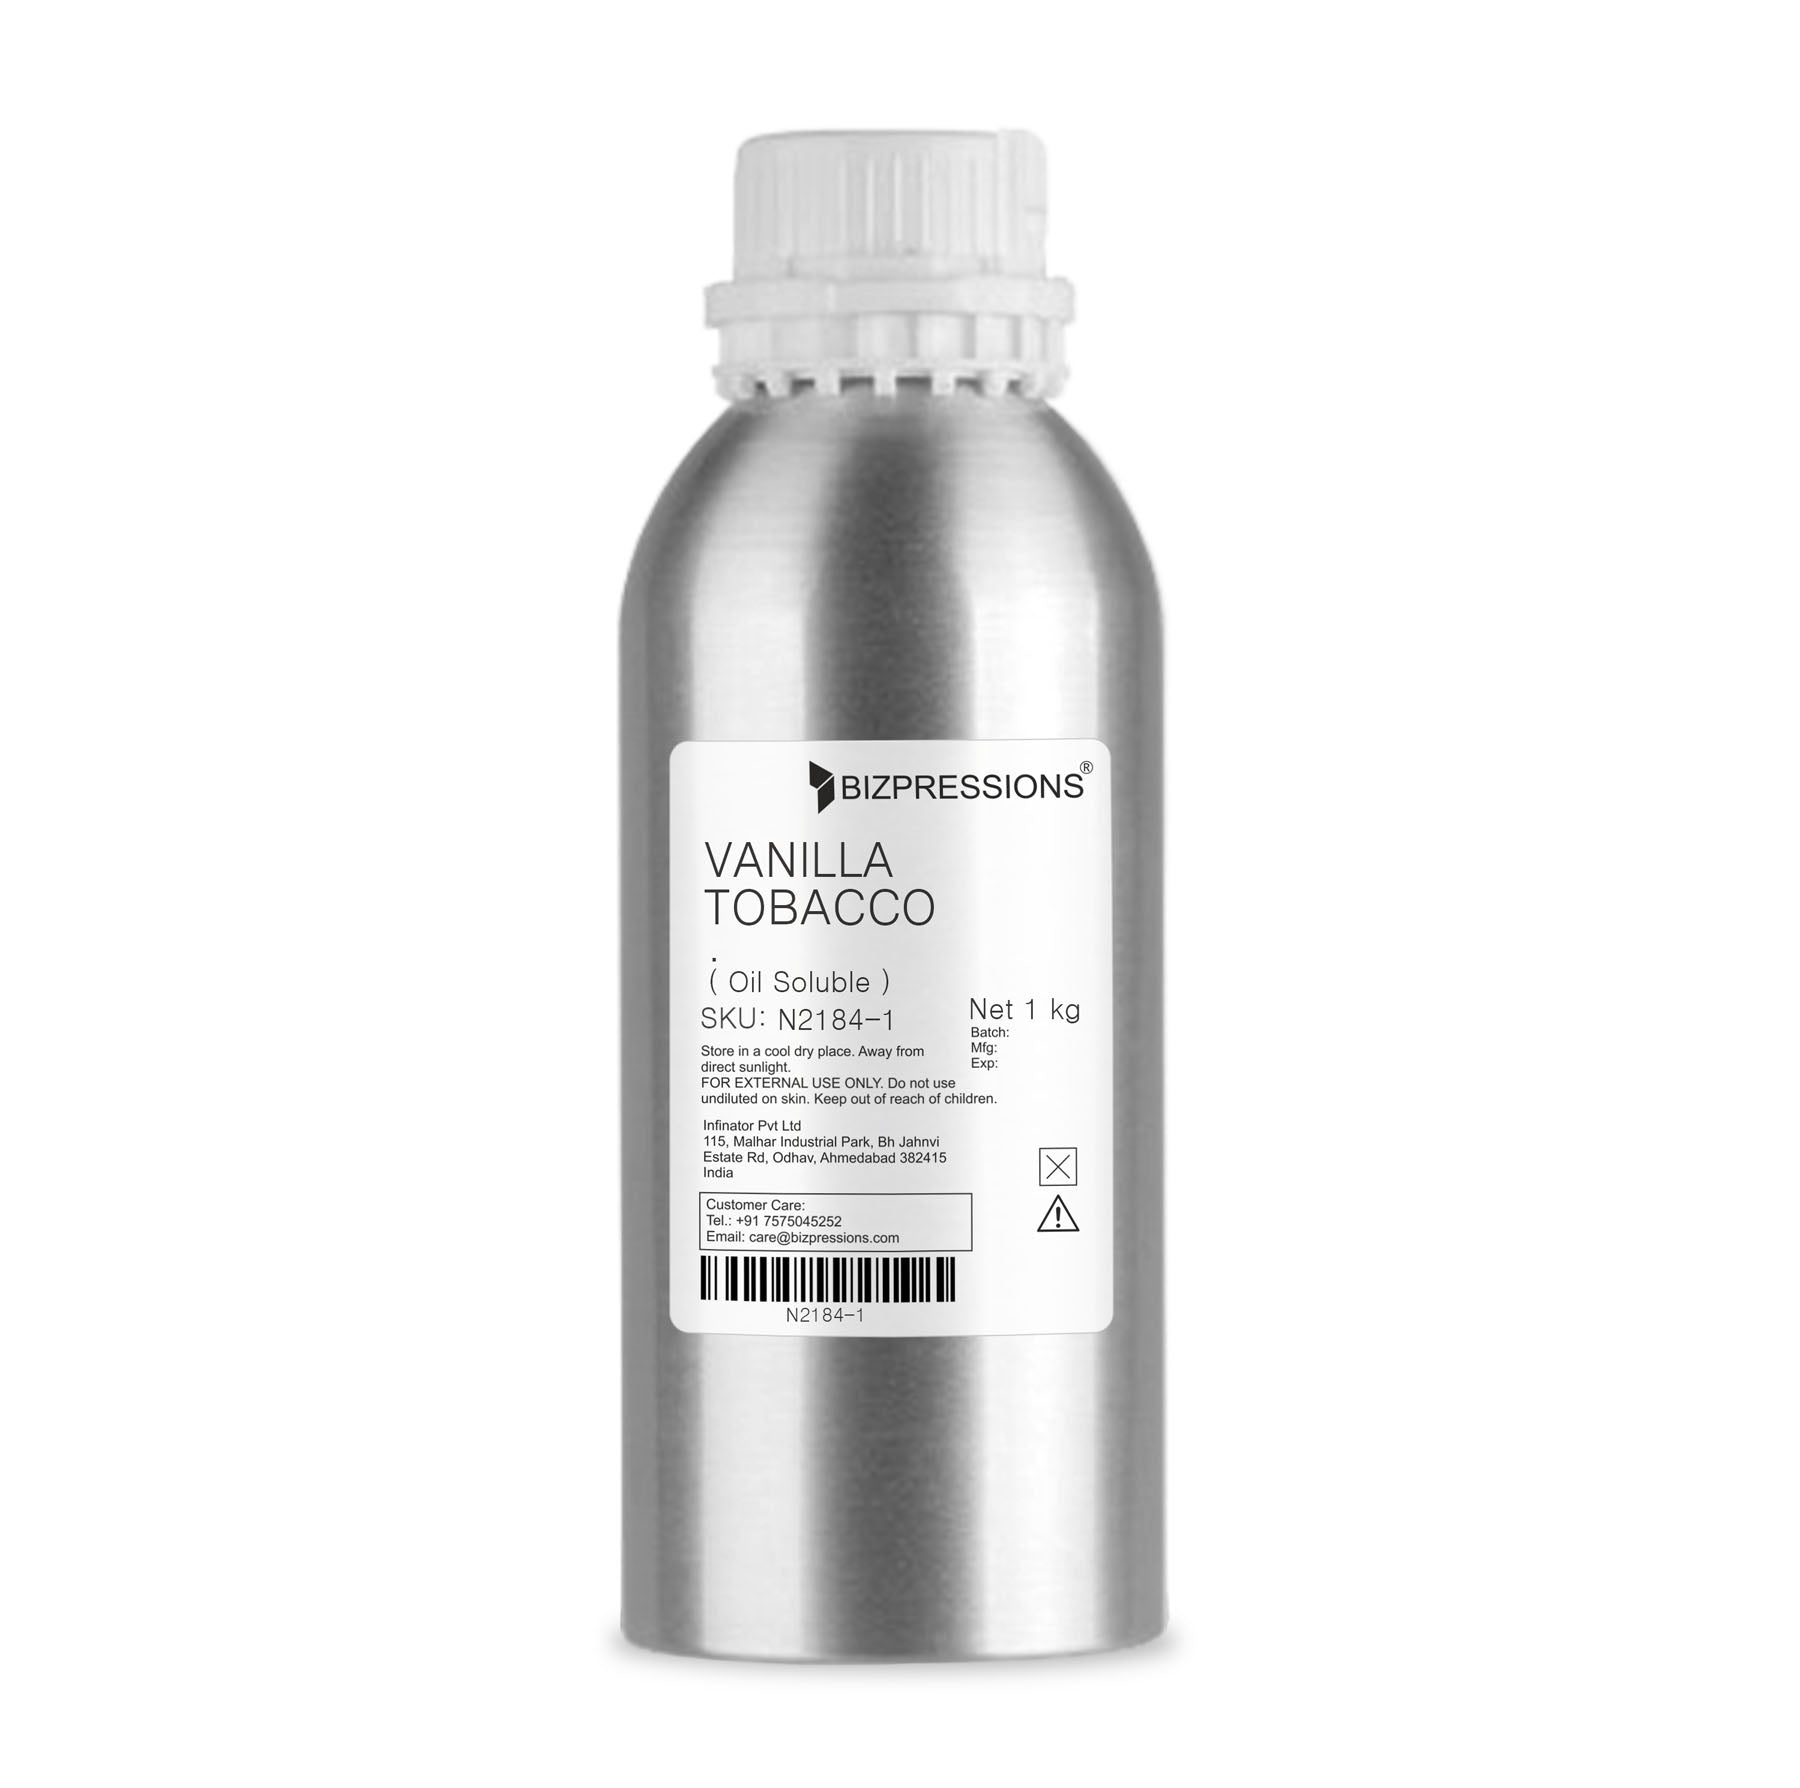 COFFEE VANILLA TOBACCO - Fragrance ( Oil Soluble ) - 1 kg